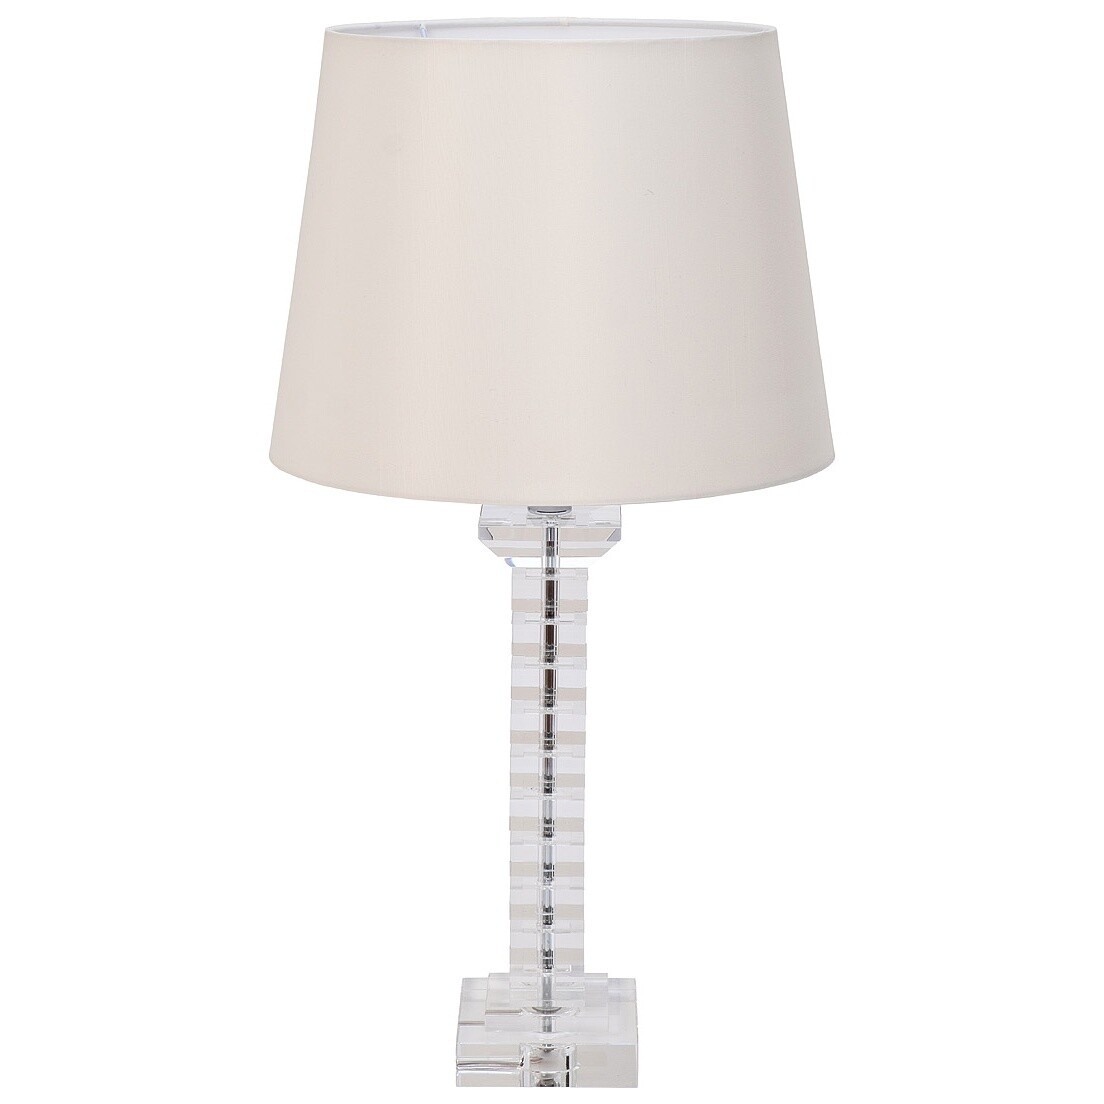 Лампа настольная с абажуром на стеклянной ножке 47х35 см кремовая, прозрачная X3533501